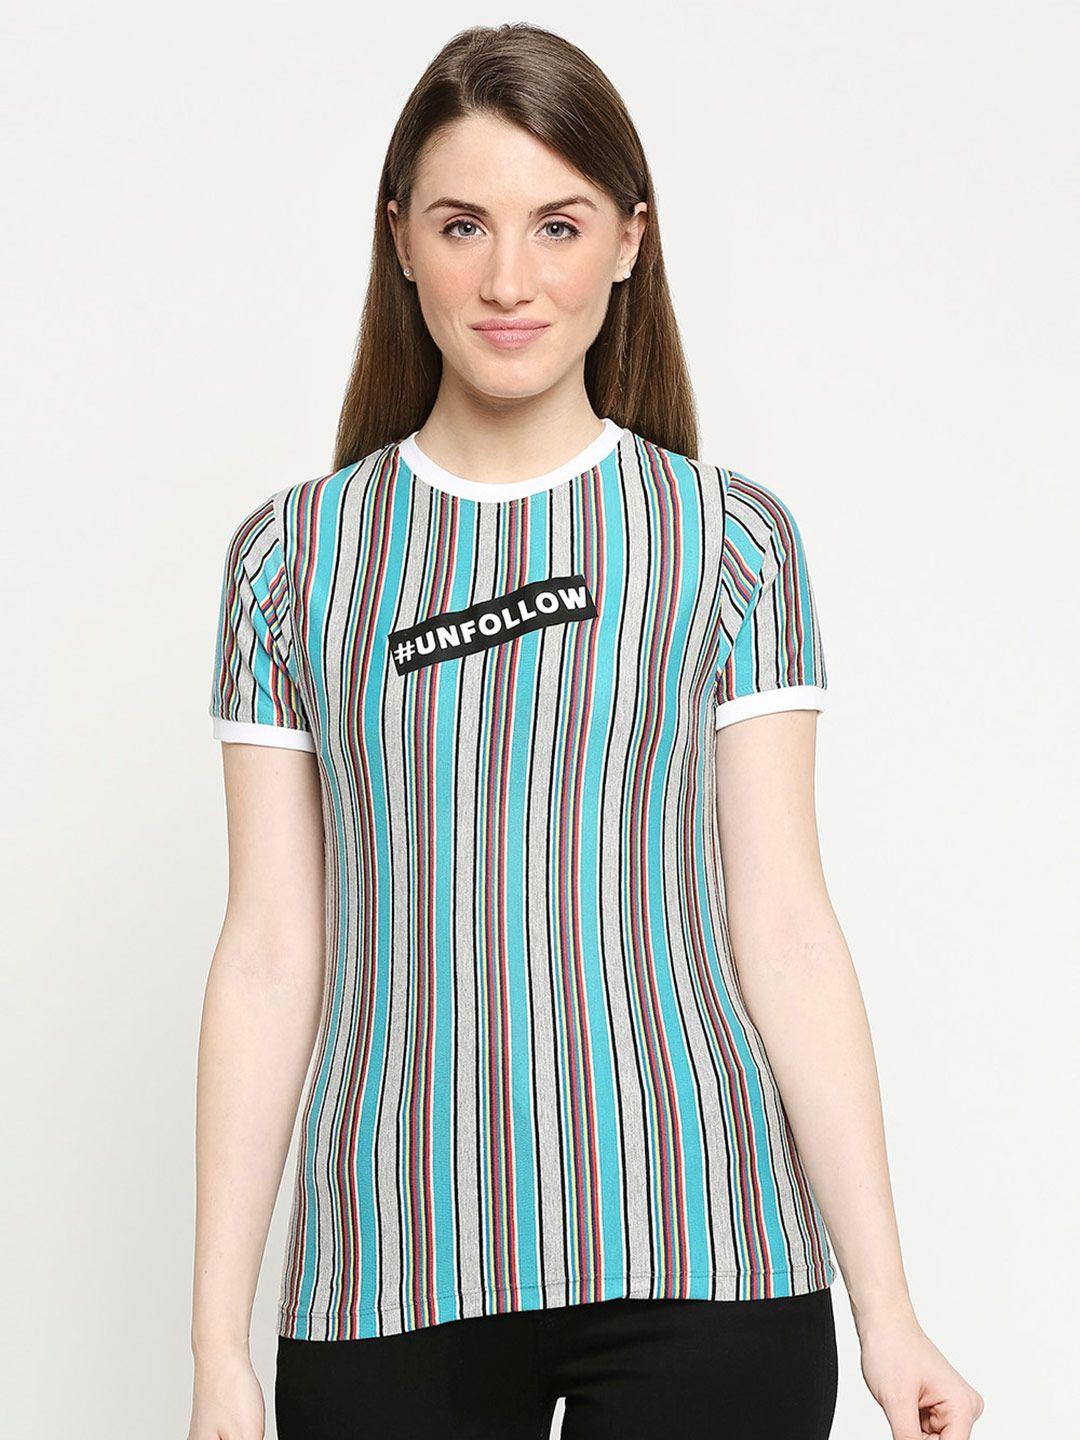 disrupt-women-green-striped-t-shirt